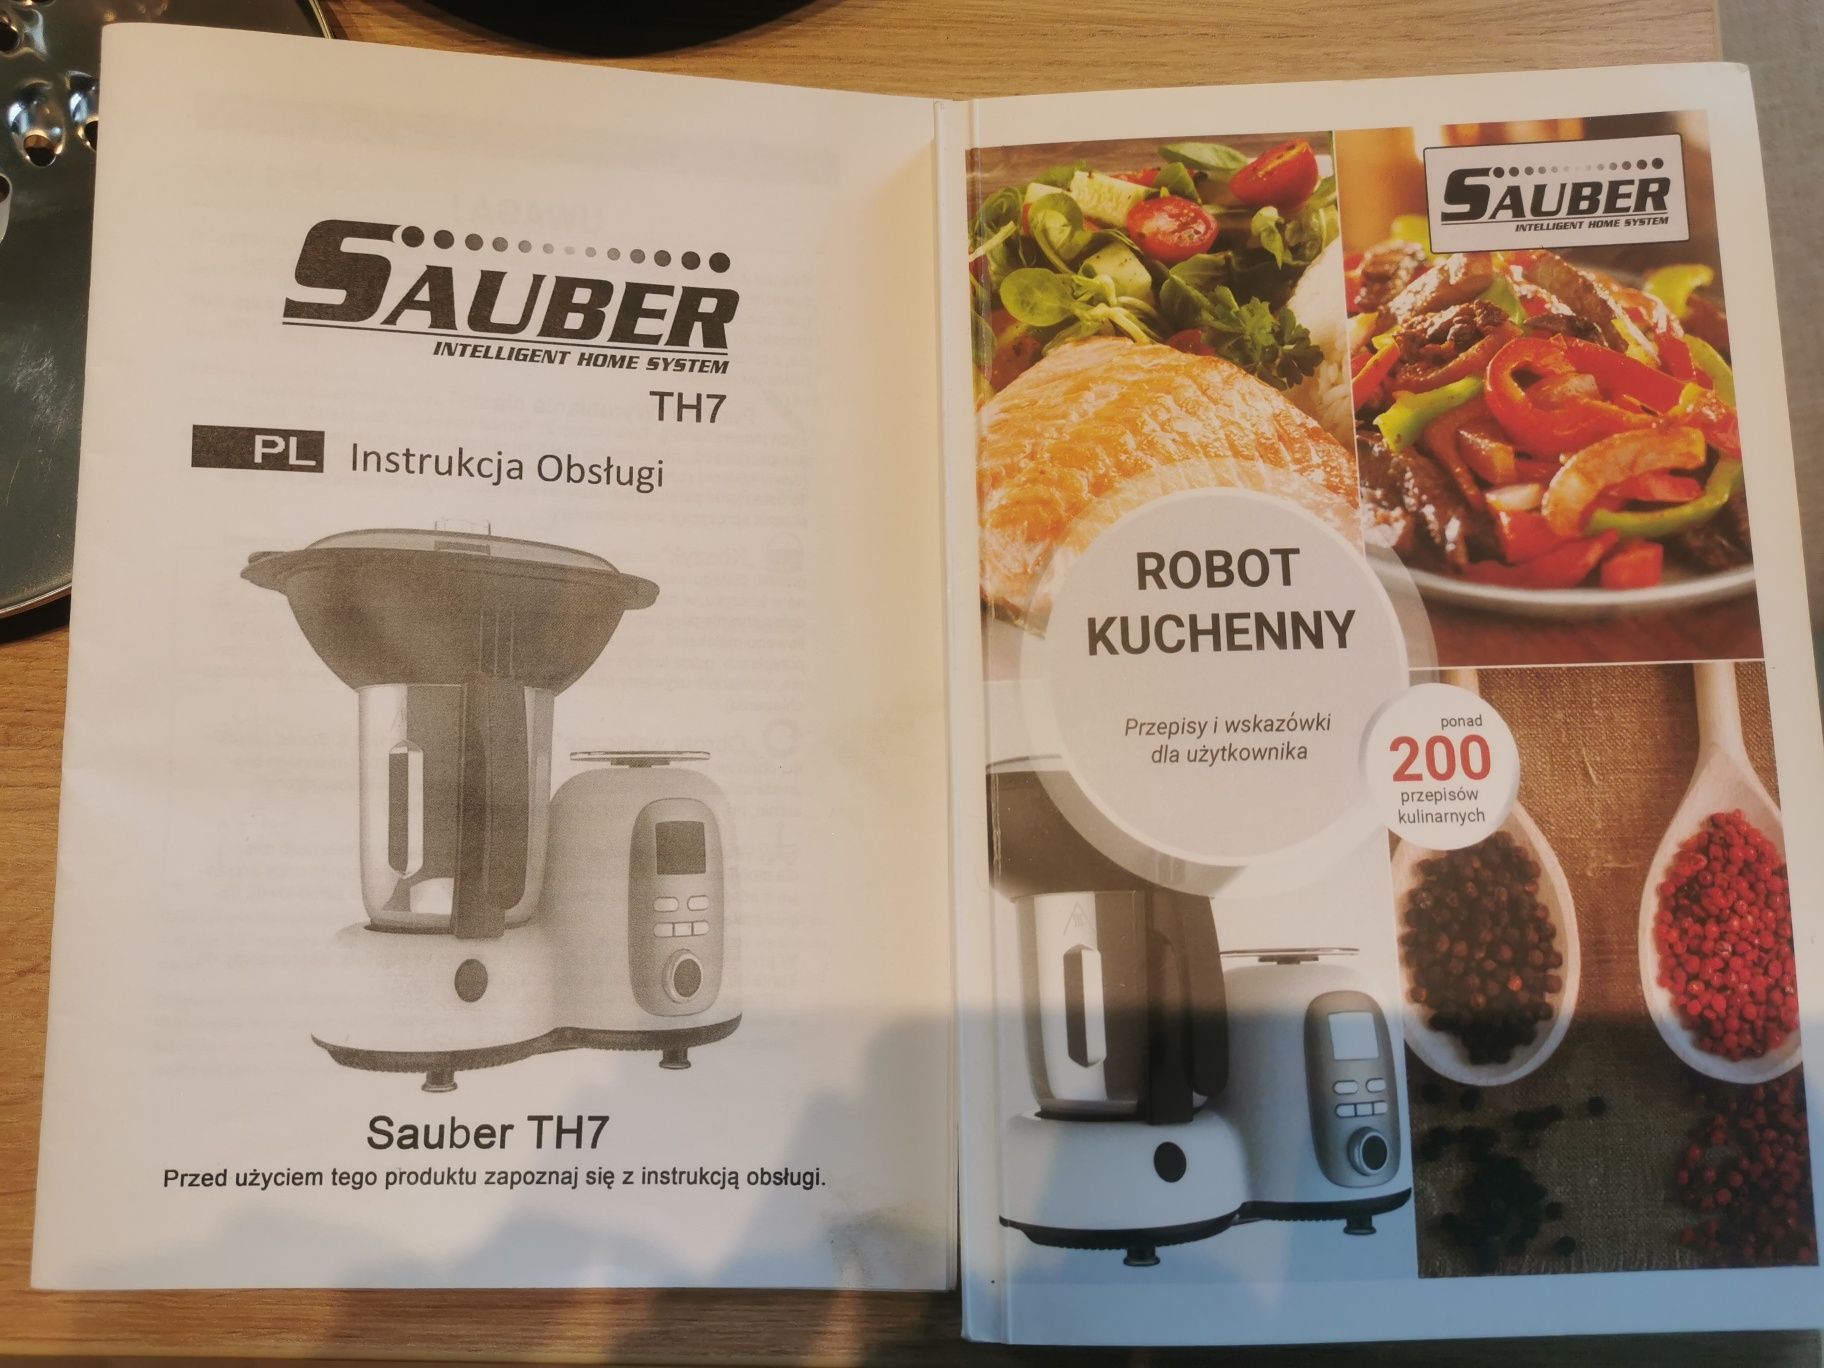 Robot kuchenny Sauber TH7